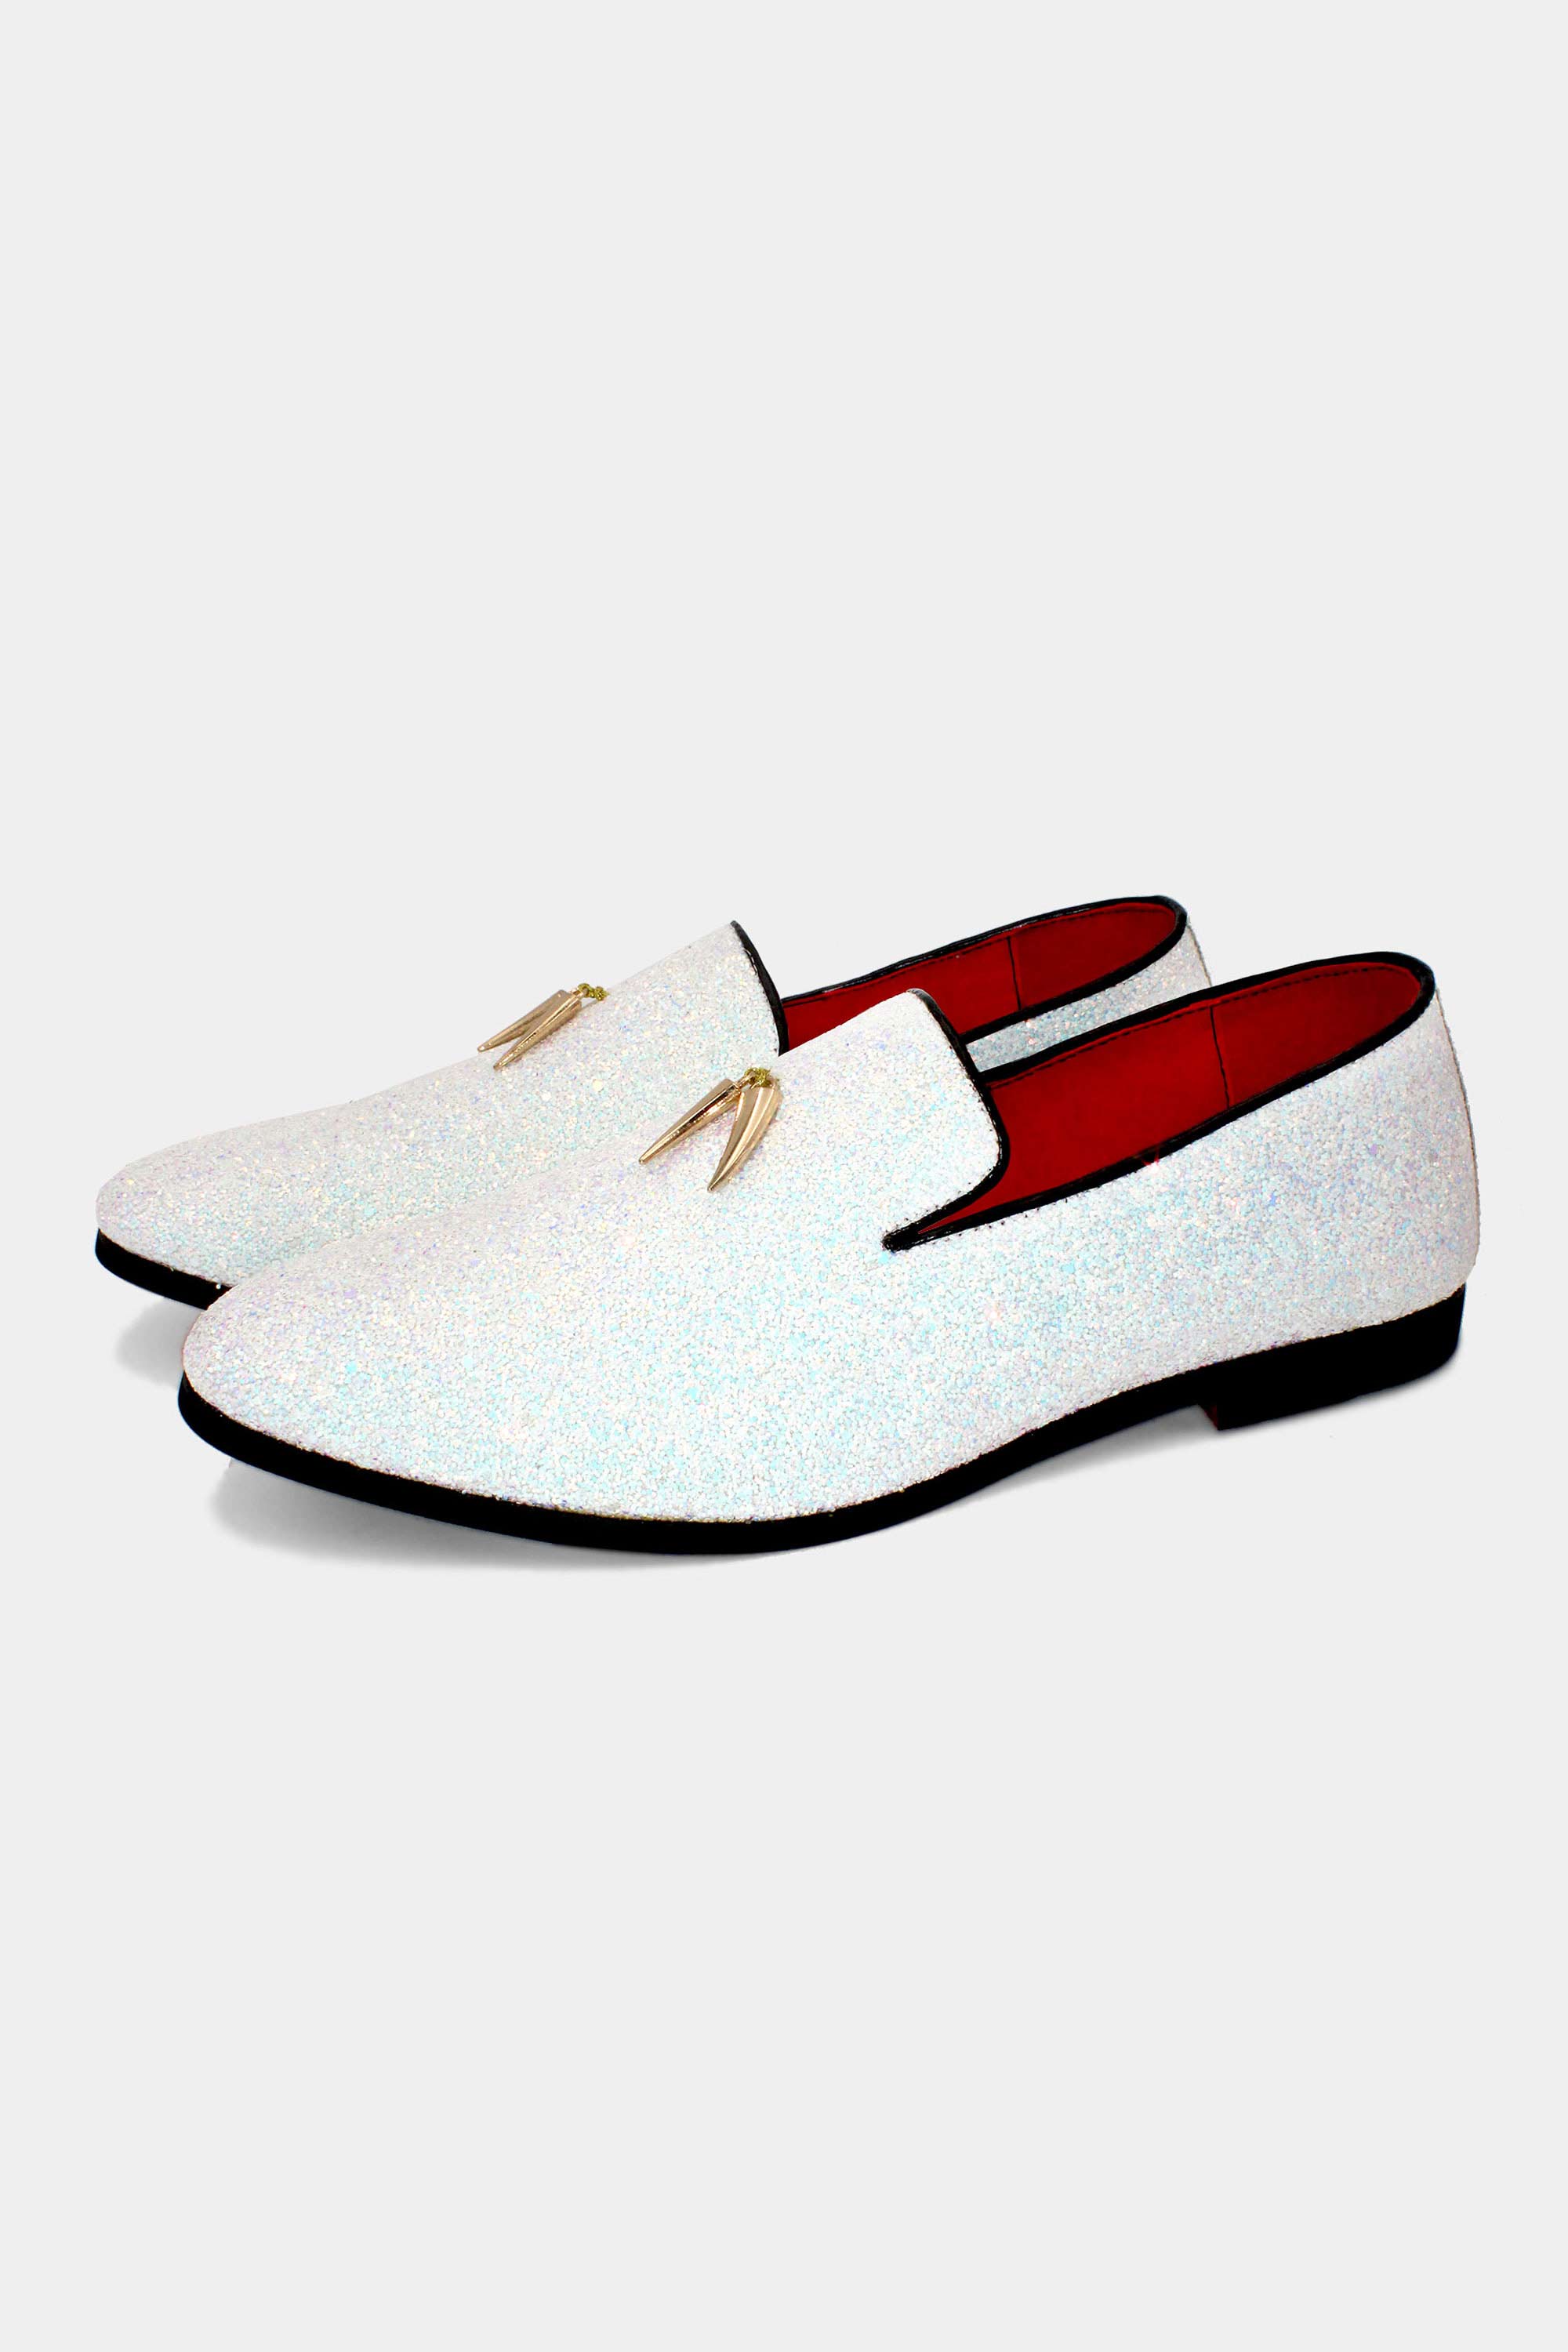 Mens-White-Glitter-Loafers-Shoes-Groom-Wedding-Shoes-for-Men-from-Gentlemansguru.com_